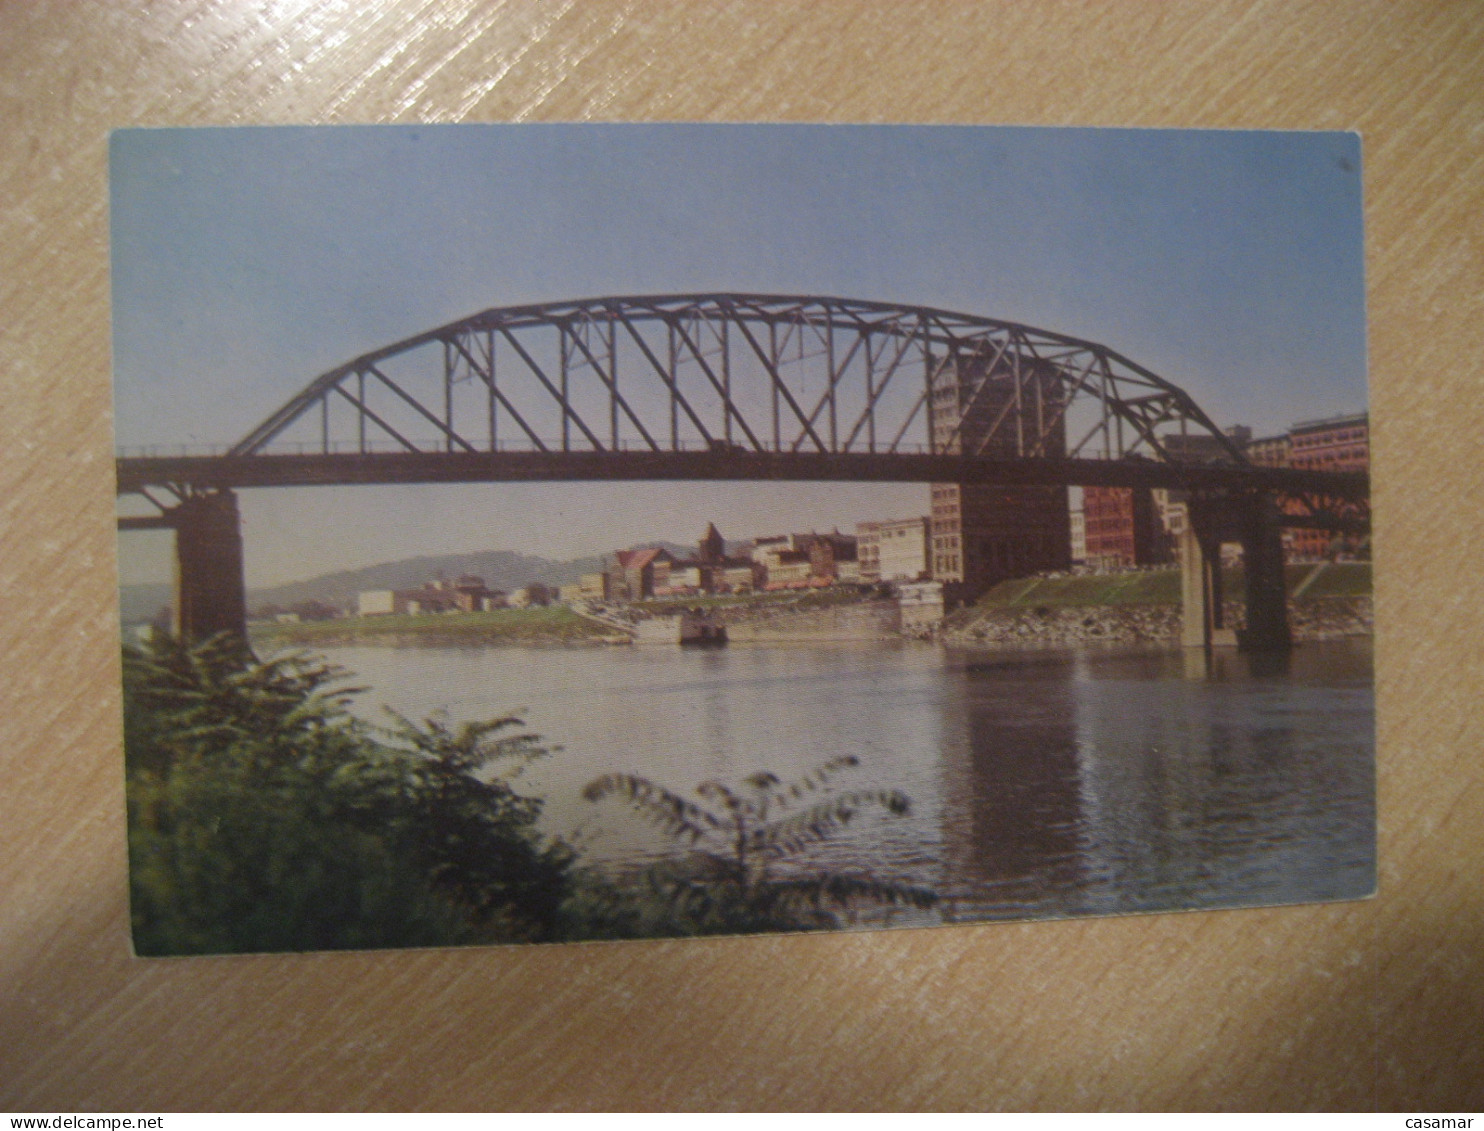 CHARLESTON West Virginia South Side Bridge Skyline Kanawha River Postcard USA - Charleston